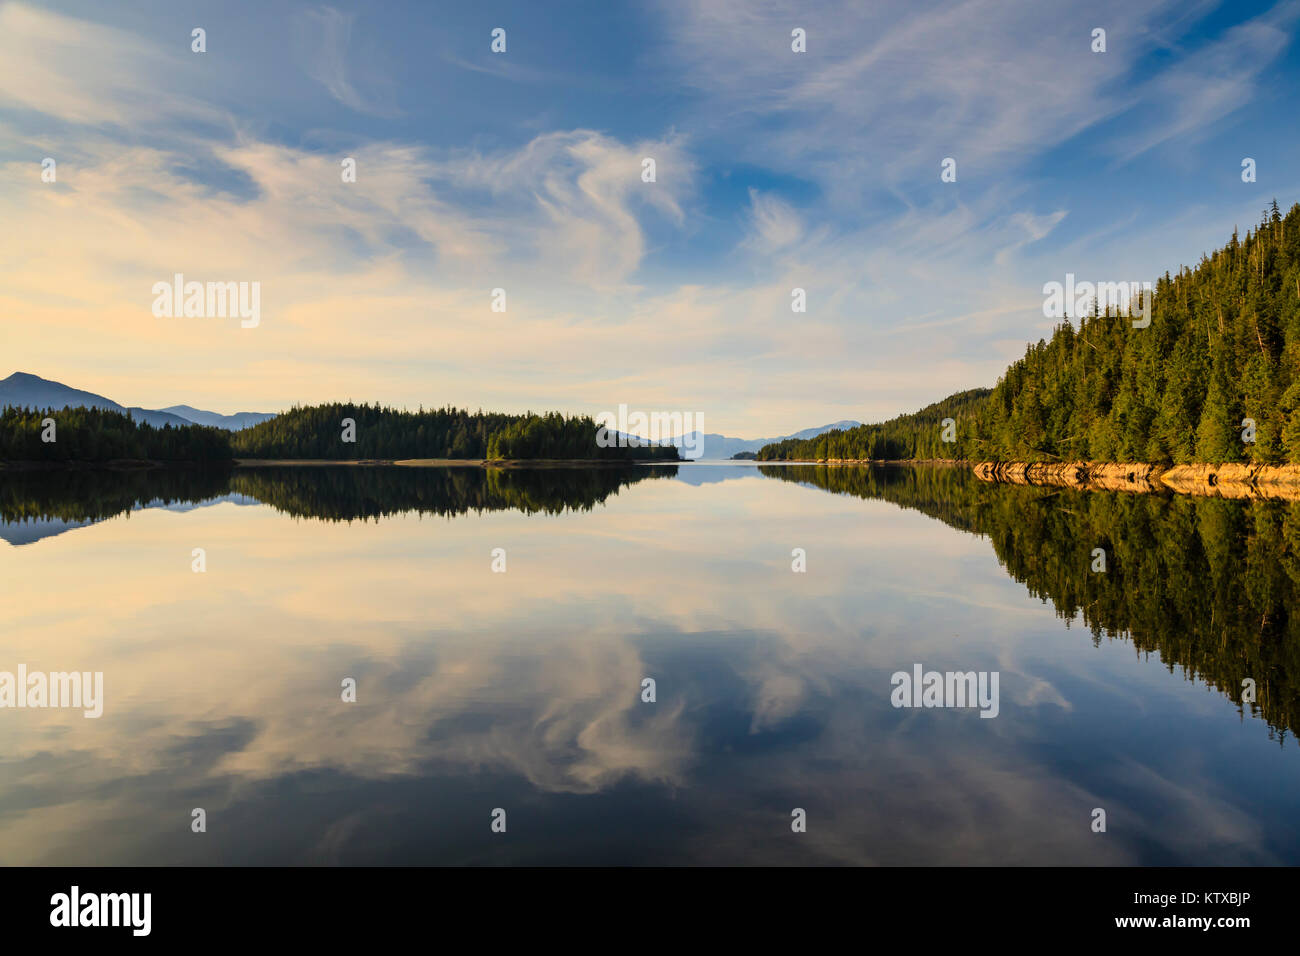 Winstanley Insel Sonnenuntergang Reflexionen, Misty Fjords National Monument, Tongass National Forest, Ketchikan, Alaska, Vereinigte Staaten von Amerika, North Amer Stockfoto